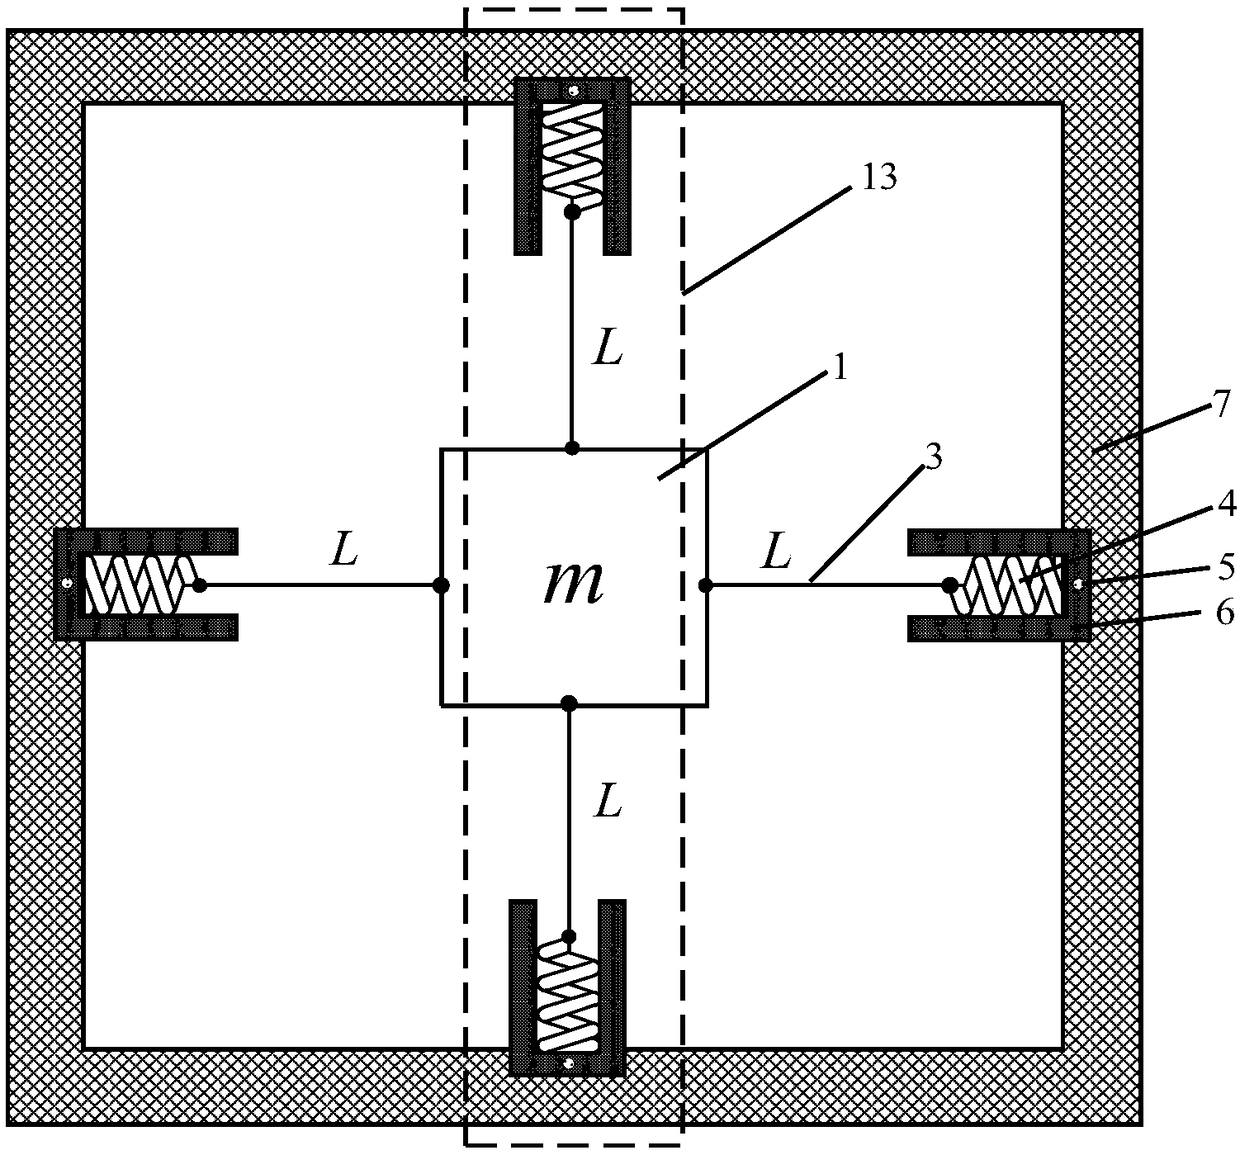 Semi-actively controlled vertical vibration isolator with quasi-zero stiffness